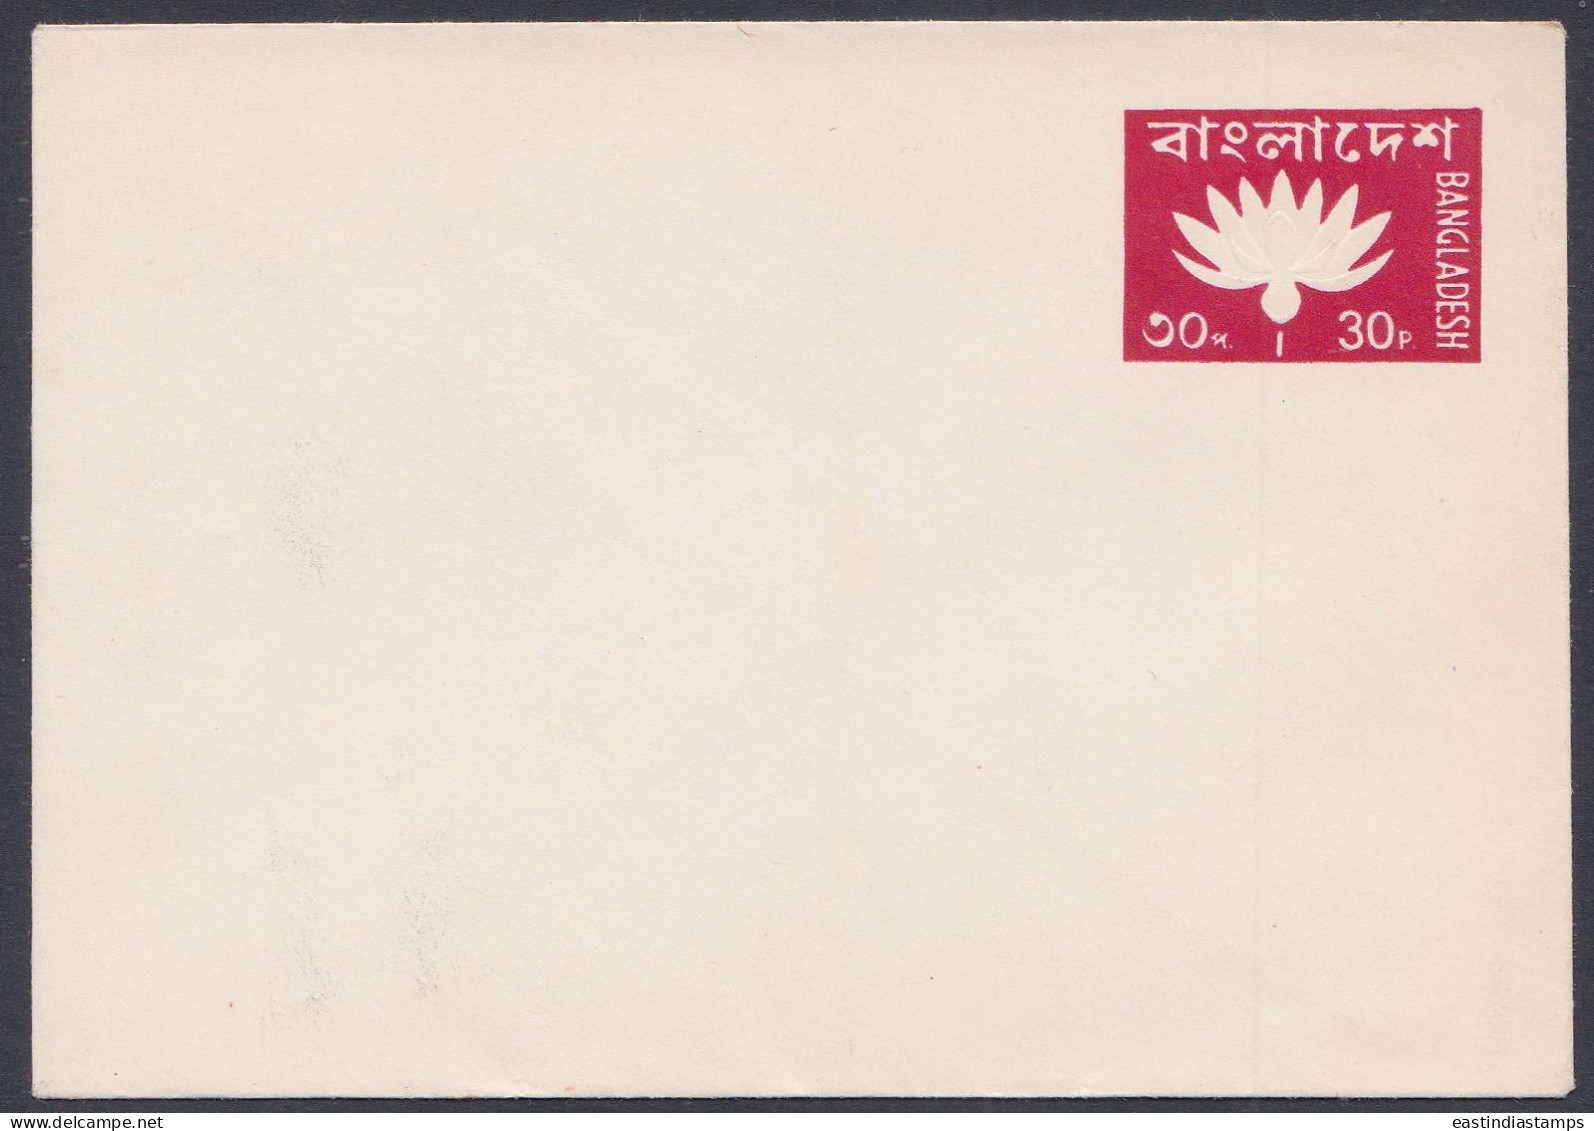 Bangladesh 30 Paisa Mint Postal Envelope, Cover, Postal Stationery - Bangladesh